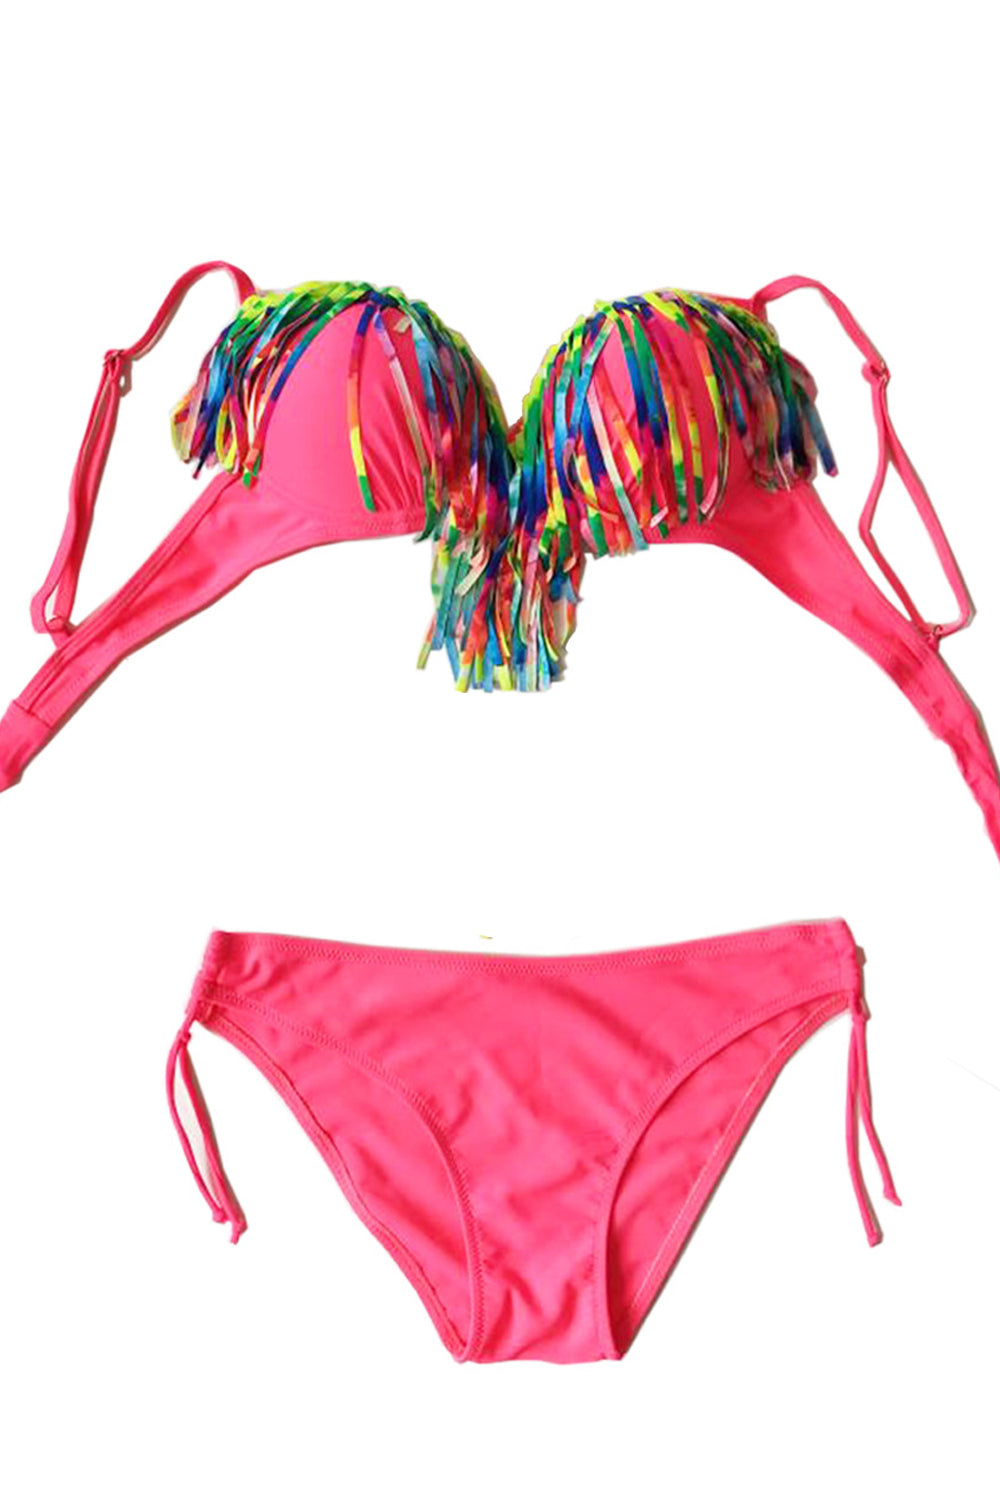 Iyasson Colorful Tassel Ornament Bikini Sets